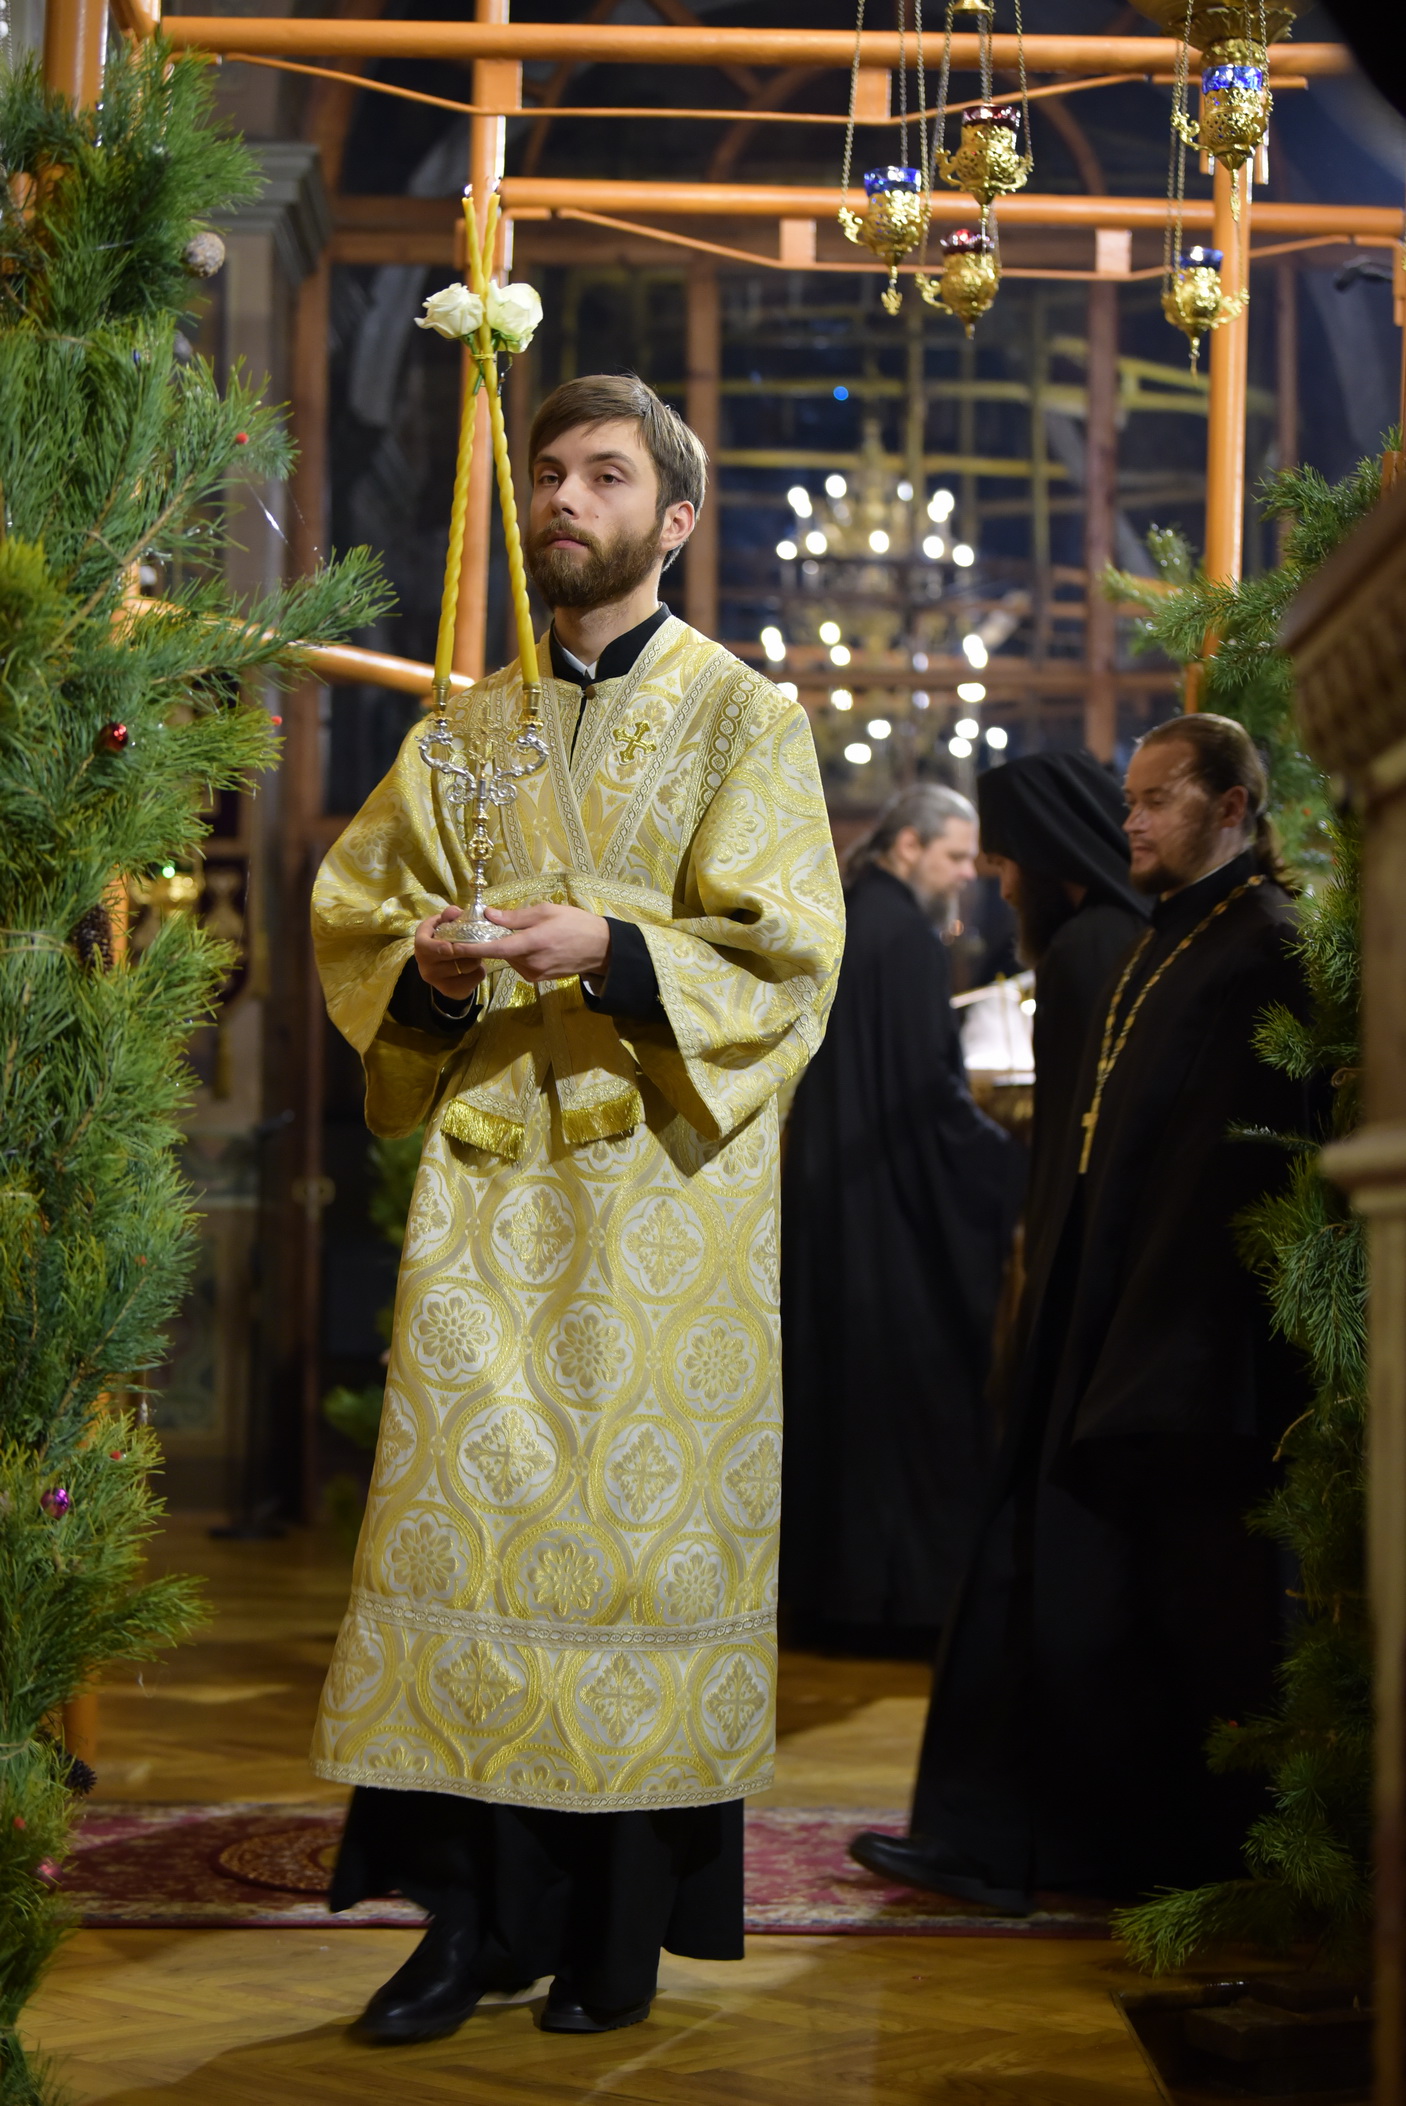 photos of orthodox christmas 0348